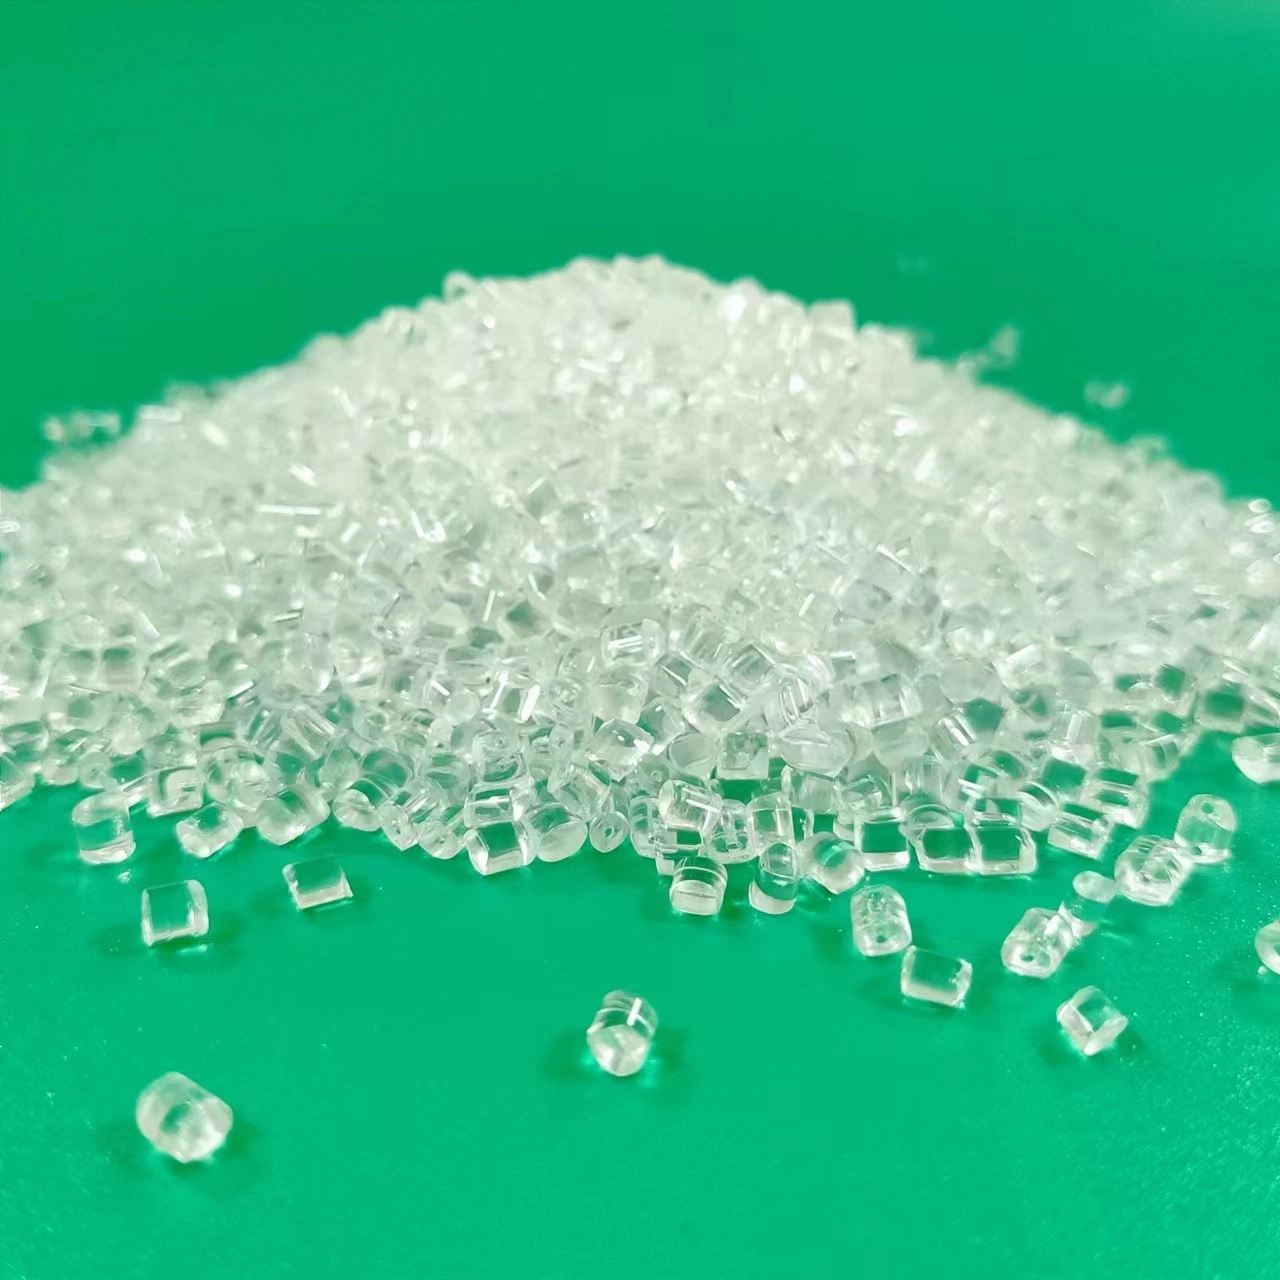 Mayor resistencia mayor rigidez polímero plástico materia prima resina de nylon